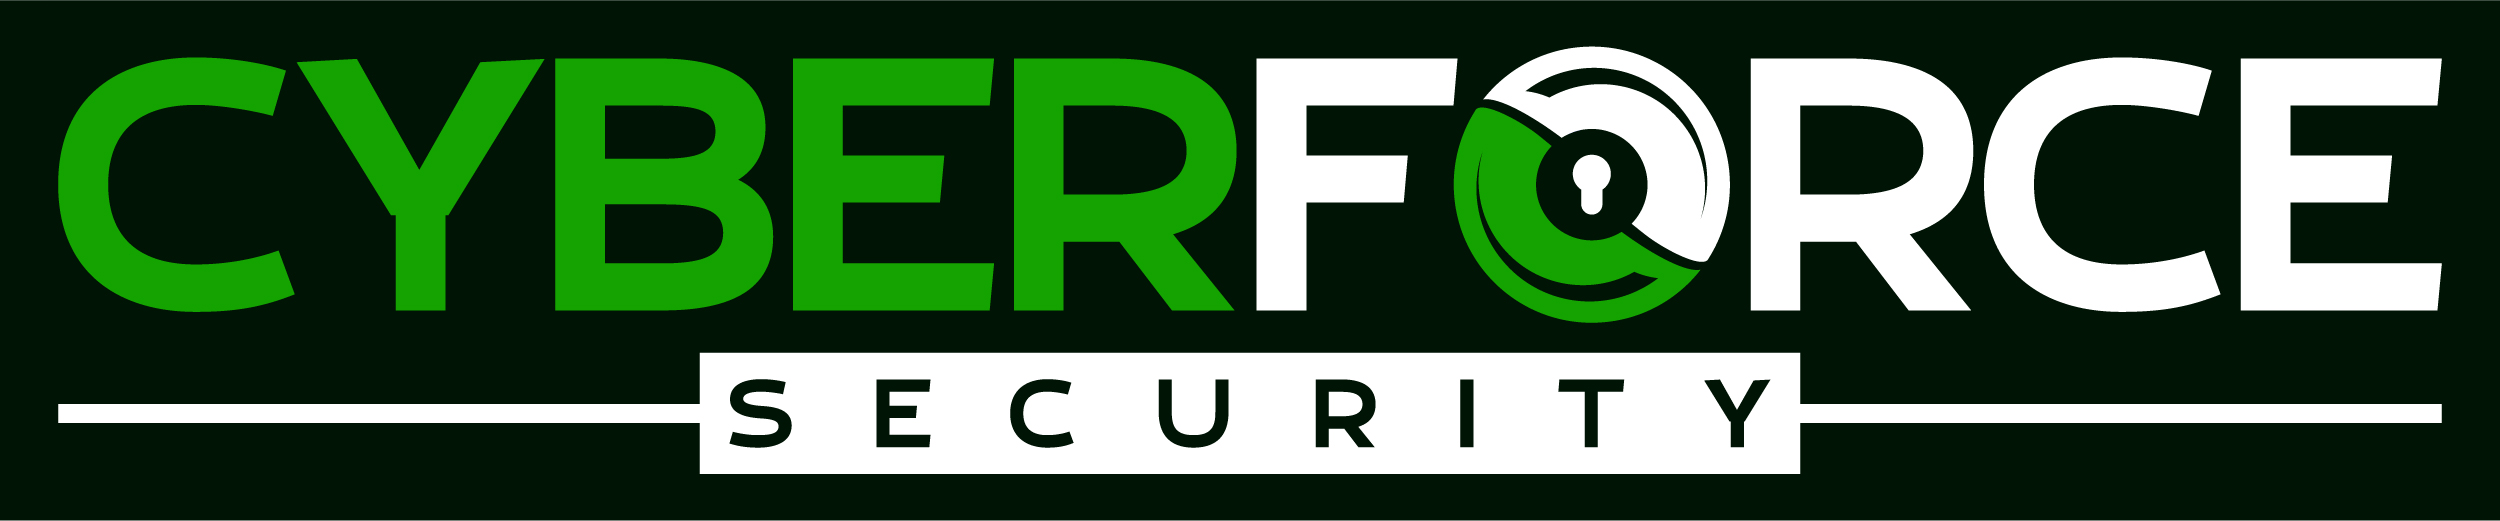 www.cyberforcesecurity.com